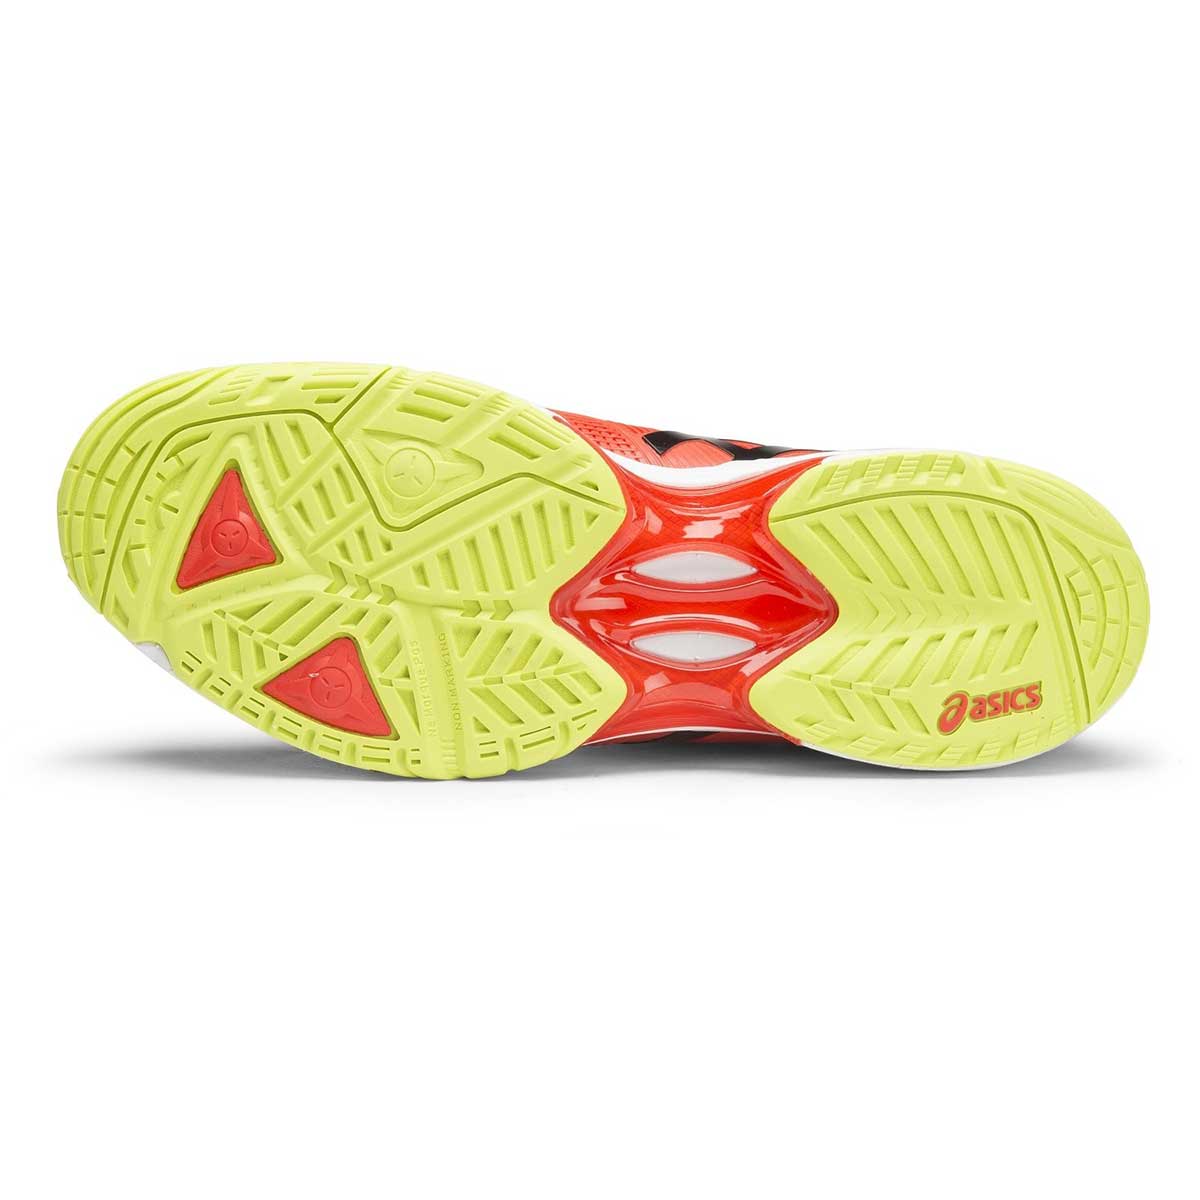 Buy Asics Gel Solution Speed 3 Tennis Shoes (Orange/Black) Online